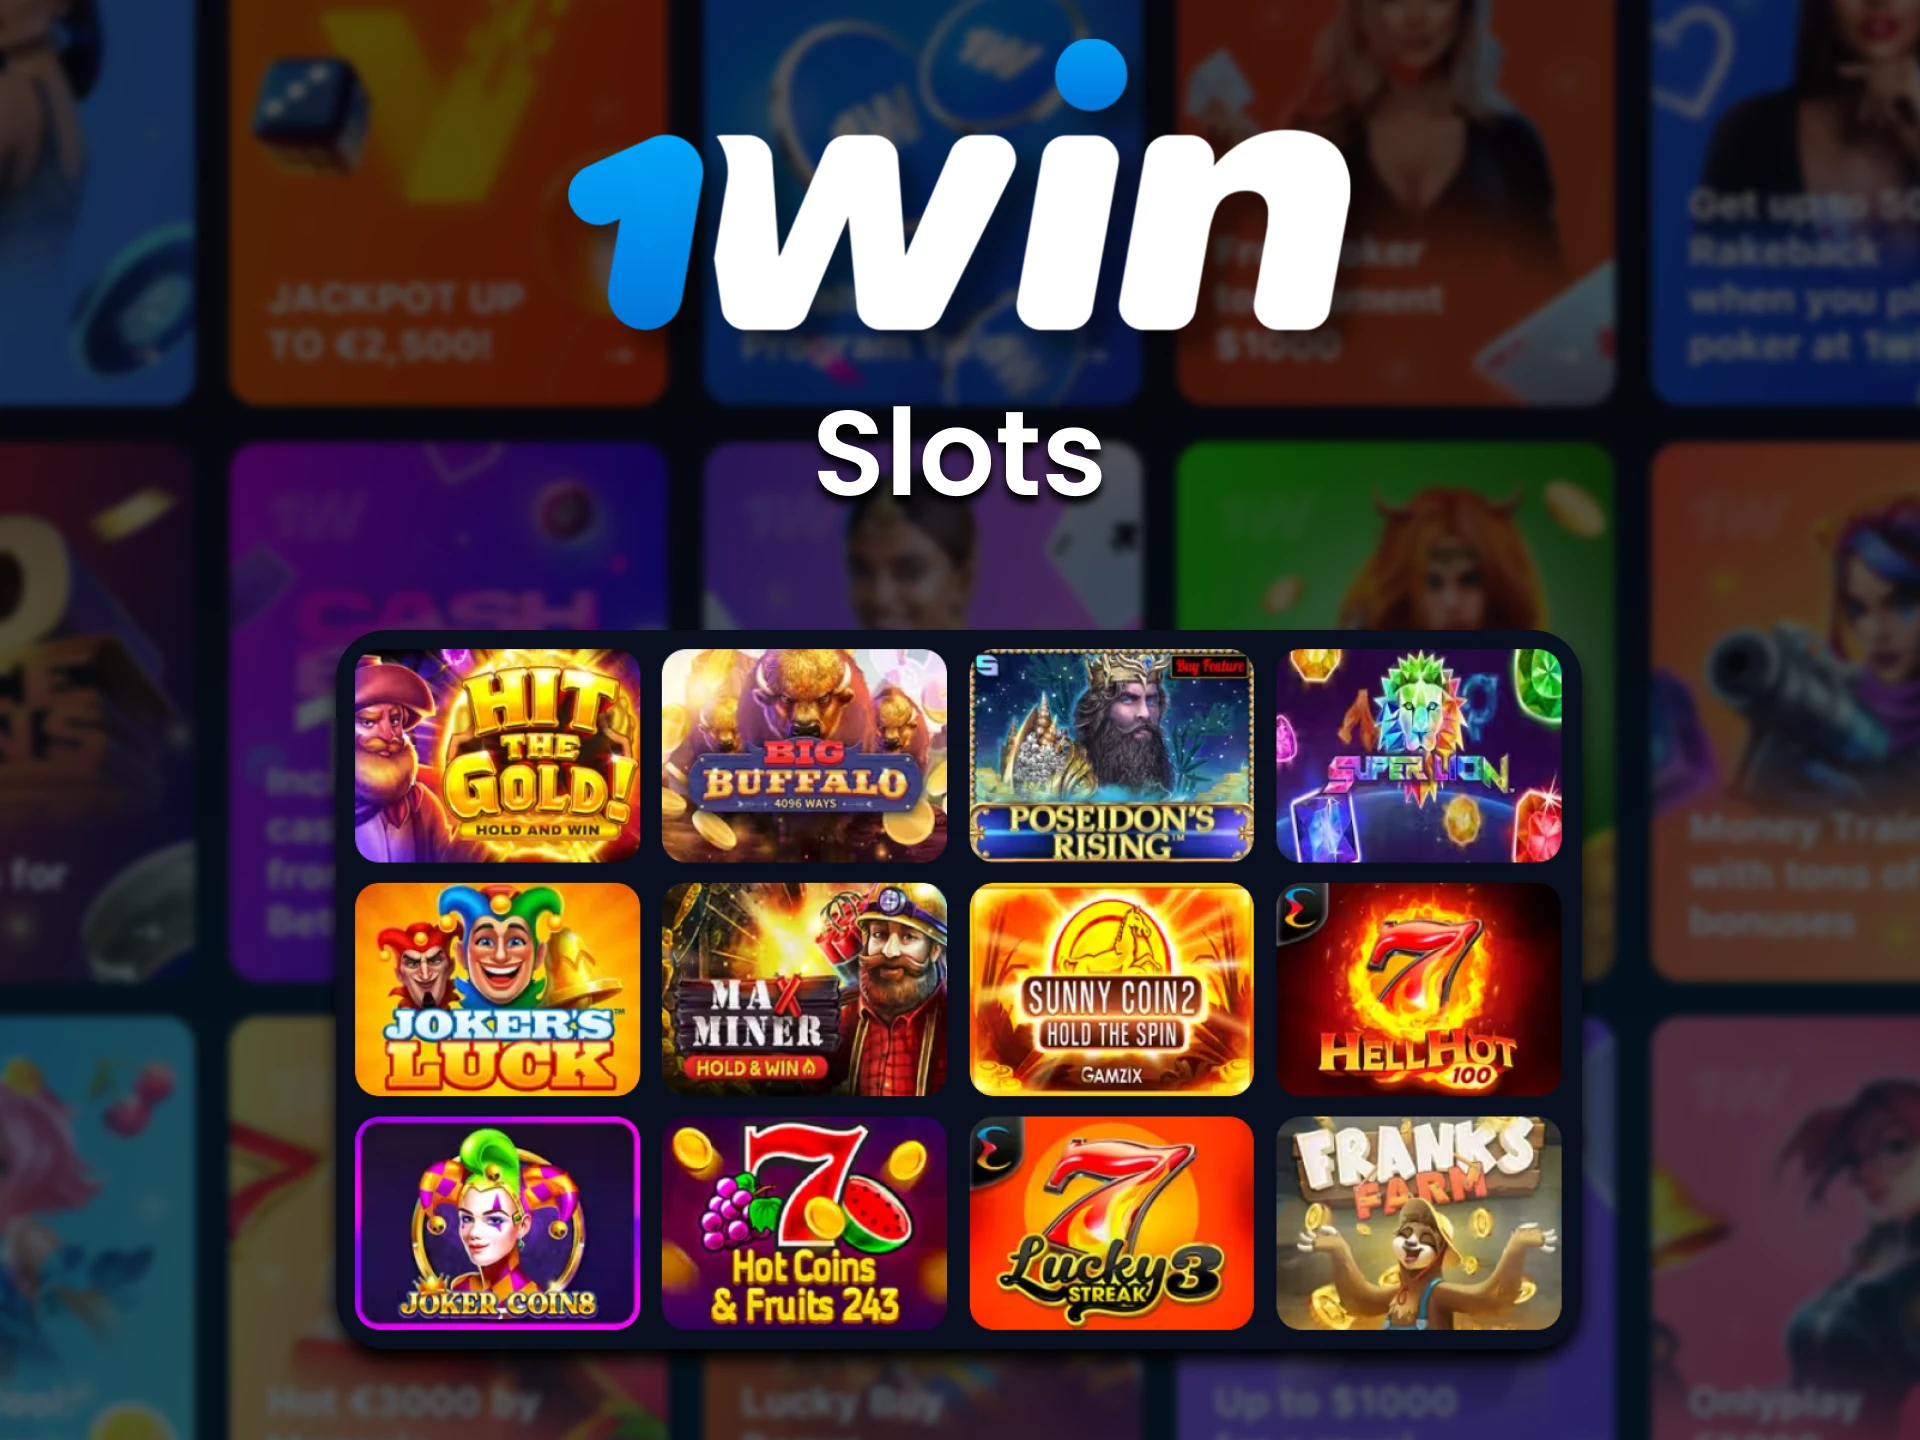 For casino games at 1win choose Slots.